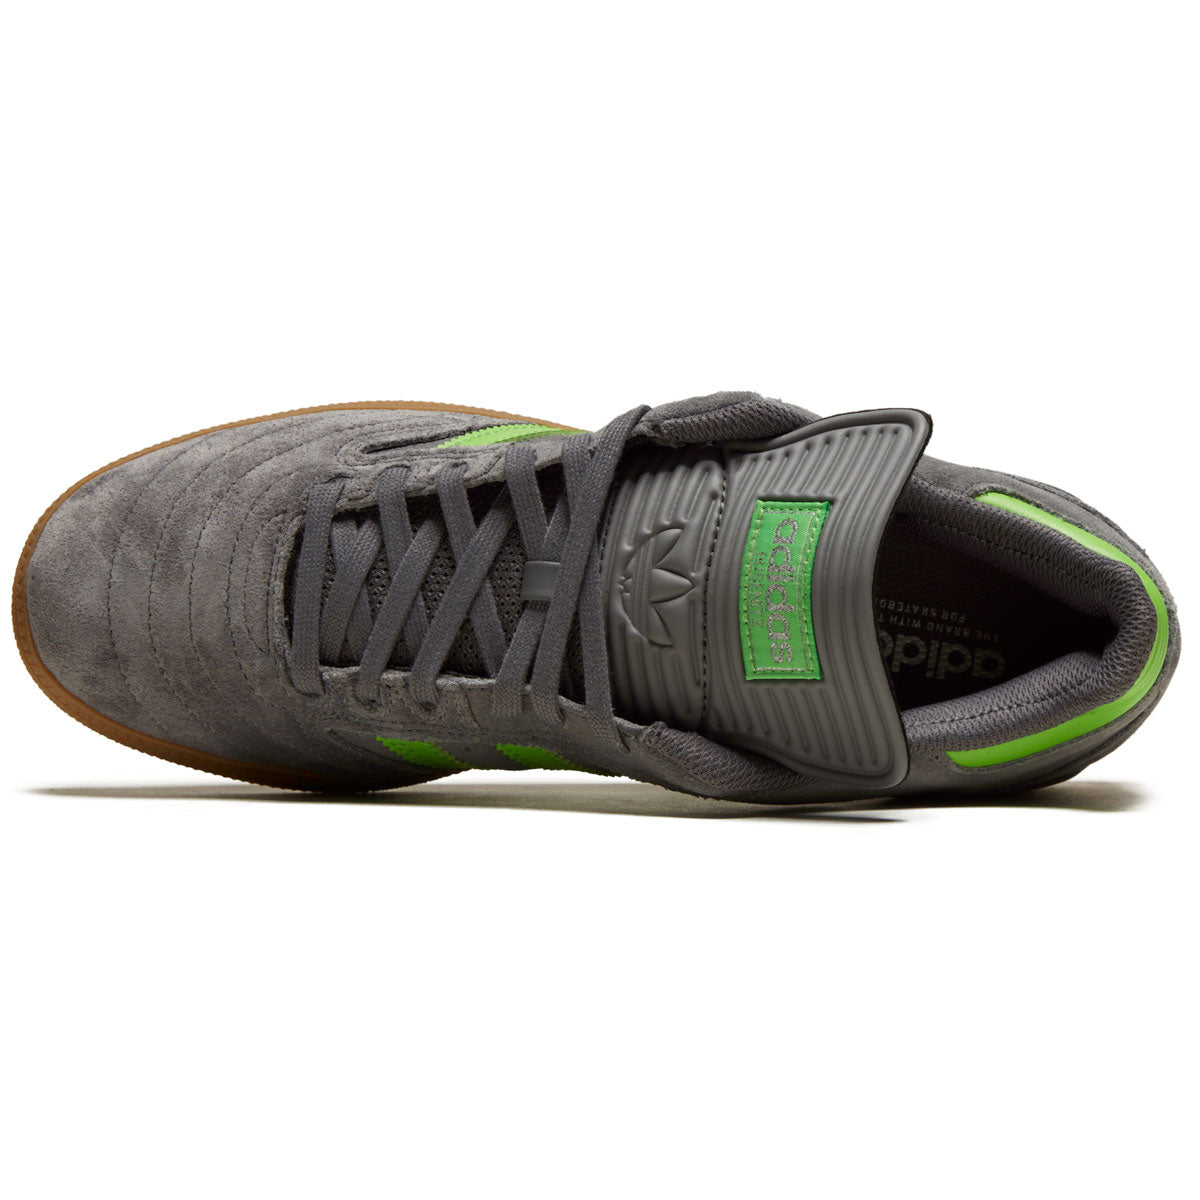 Adidas Busenitz Shoes - Grey/Lucid Lime/Gum image 3